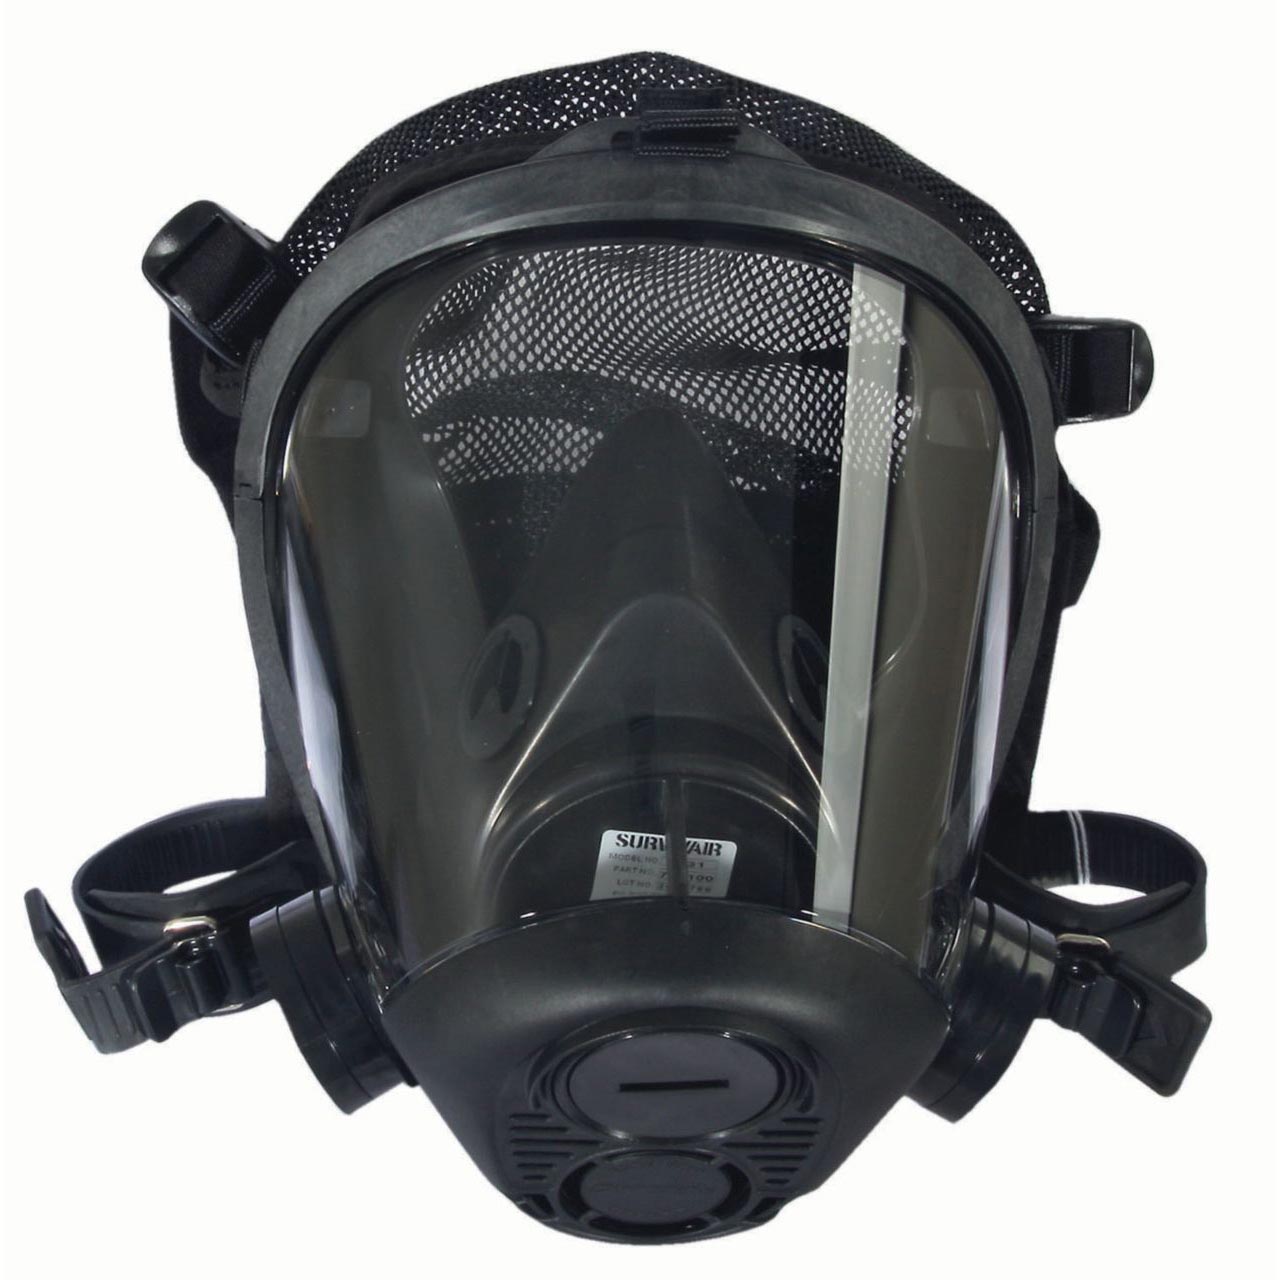 Honeywell Survivair Opti-Fit Tactical Gas Mask Facepiece with Mesh Headnet